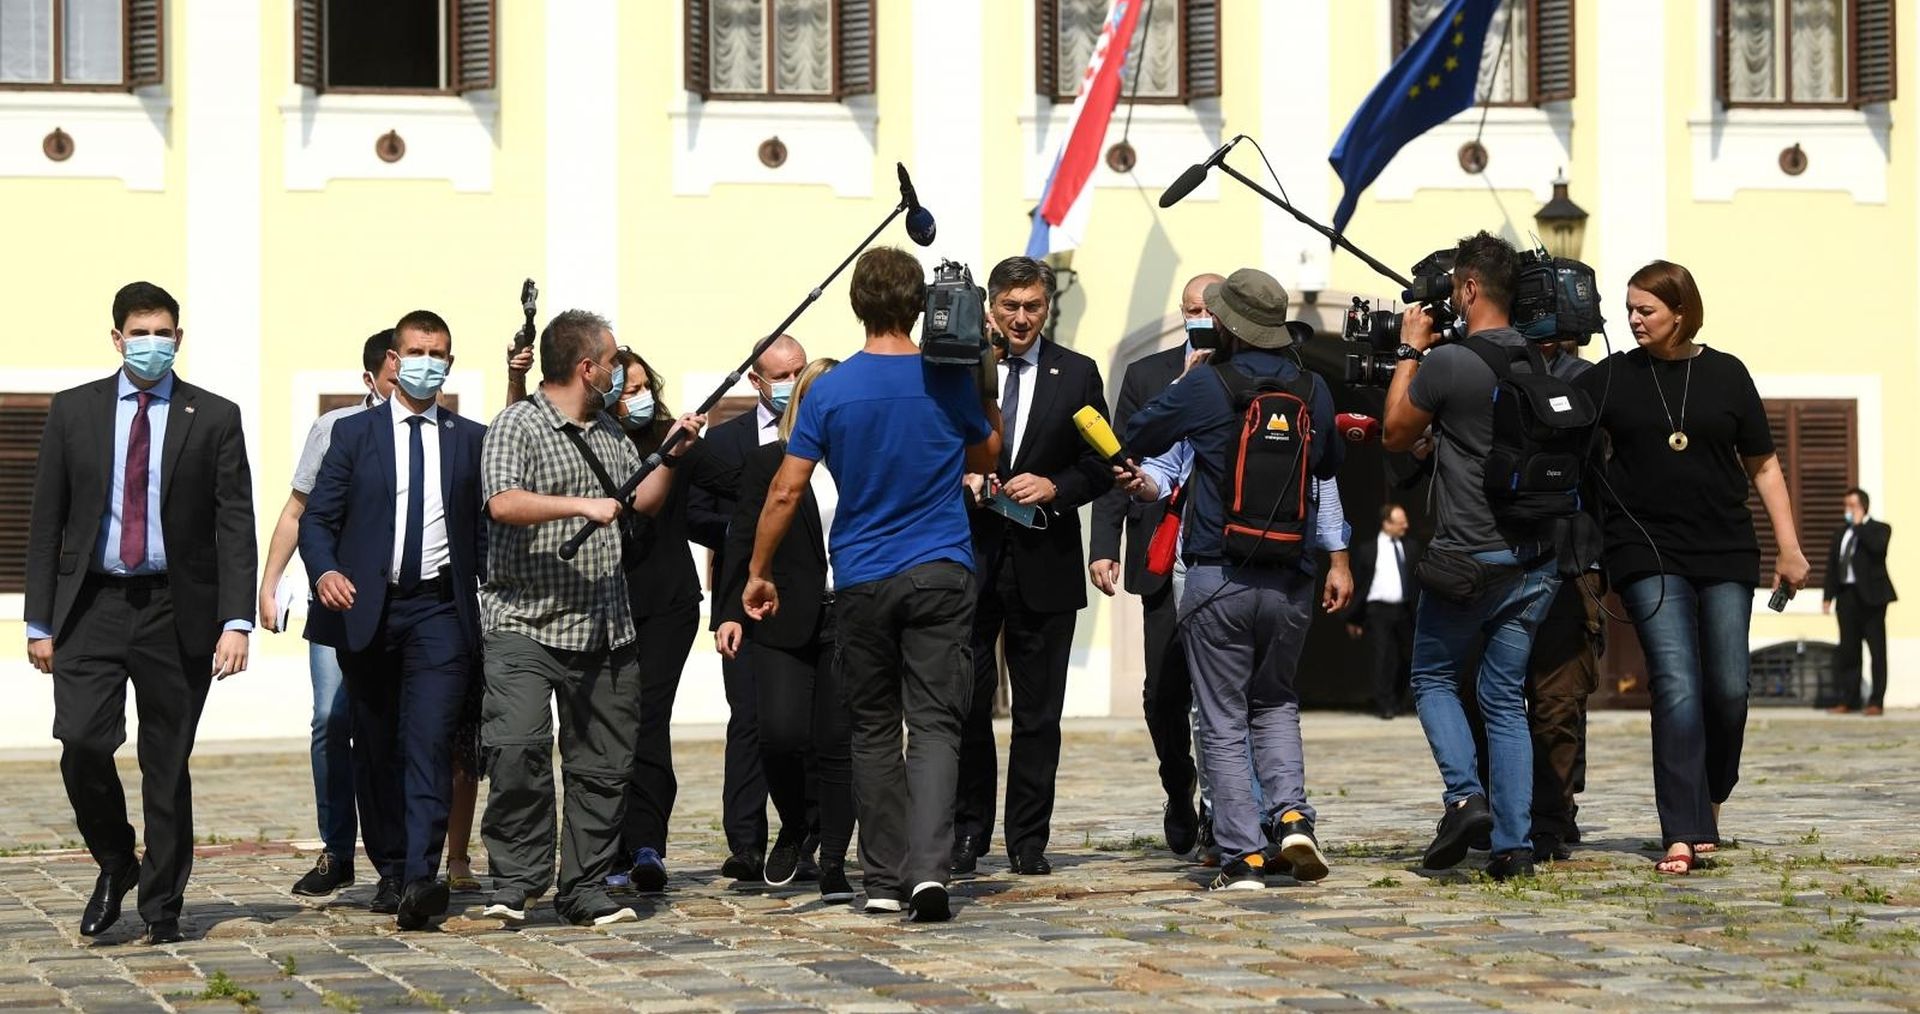 23.07.2020., Zagreb - Dolazak premijera Andreja Plenkovica u Sabor na imenovanje nove Vlade.
Photo: Marko Lukunic/PIXSELL